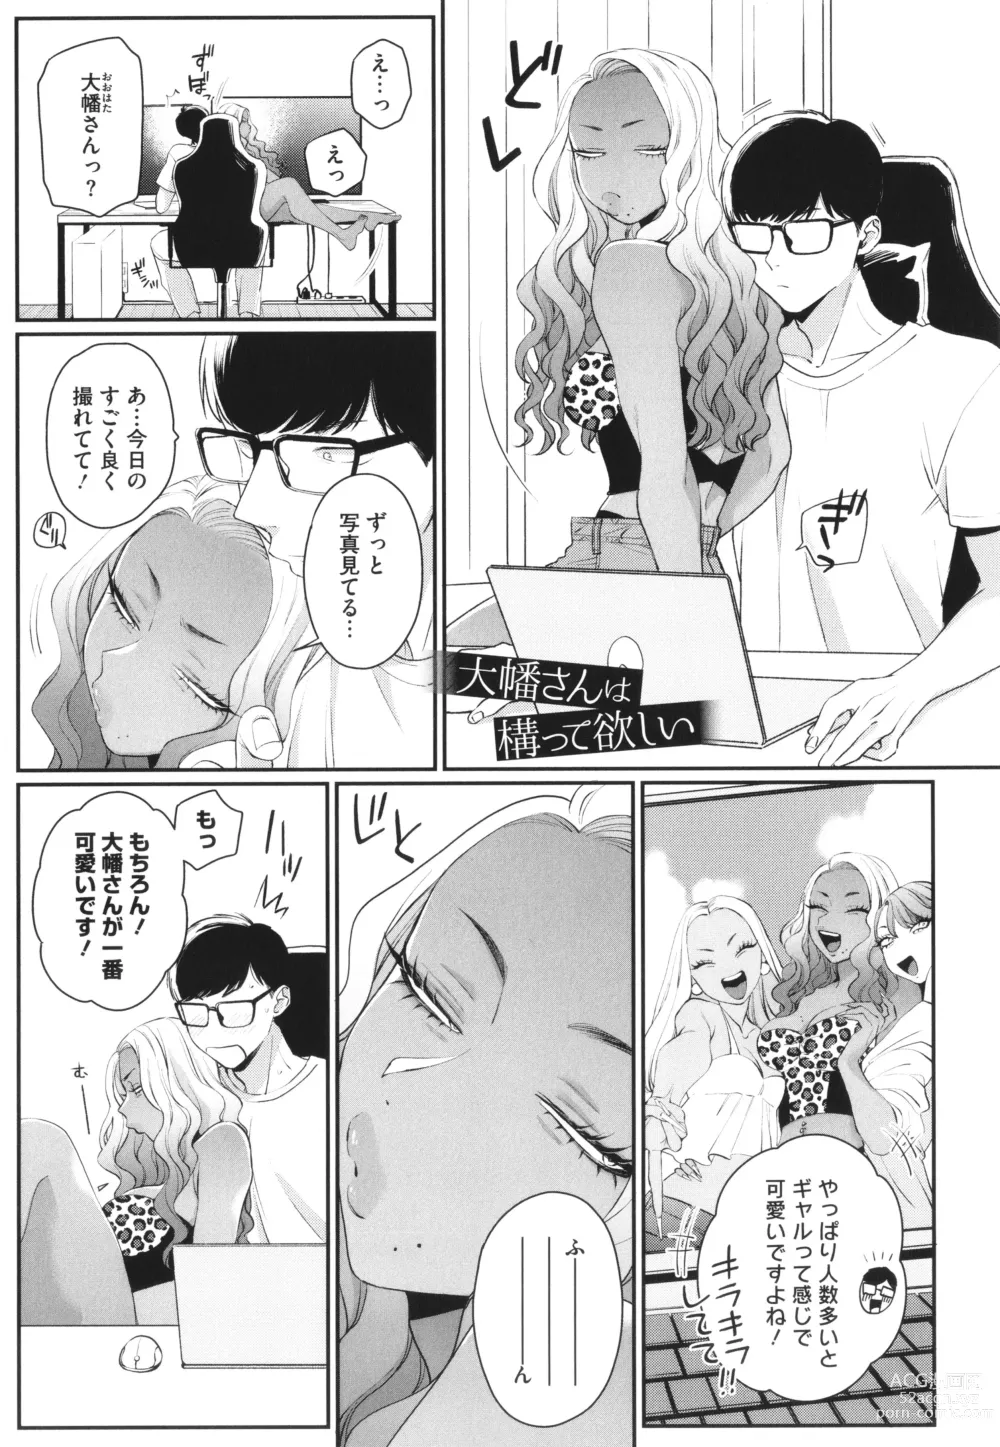 Page 206 of manga Kuro Gal a La Carte + Toranoana Kounyuu Tokuten 4P Leaflet